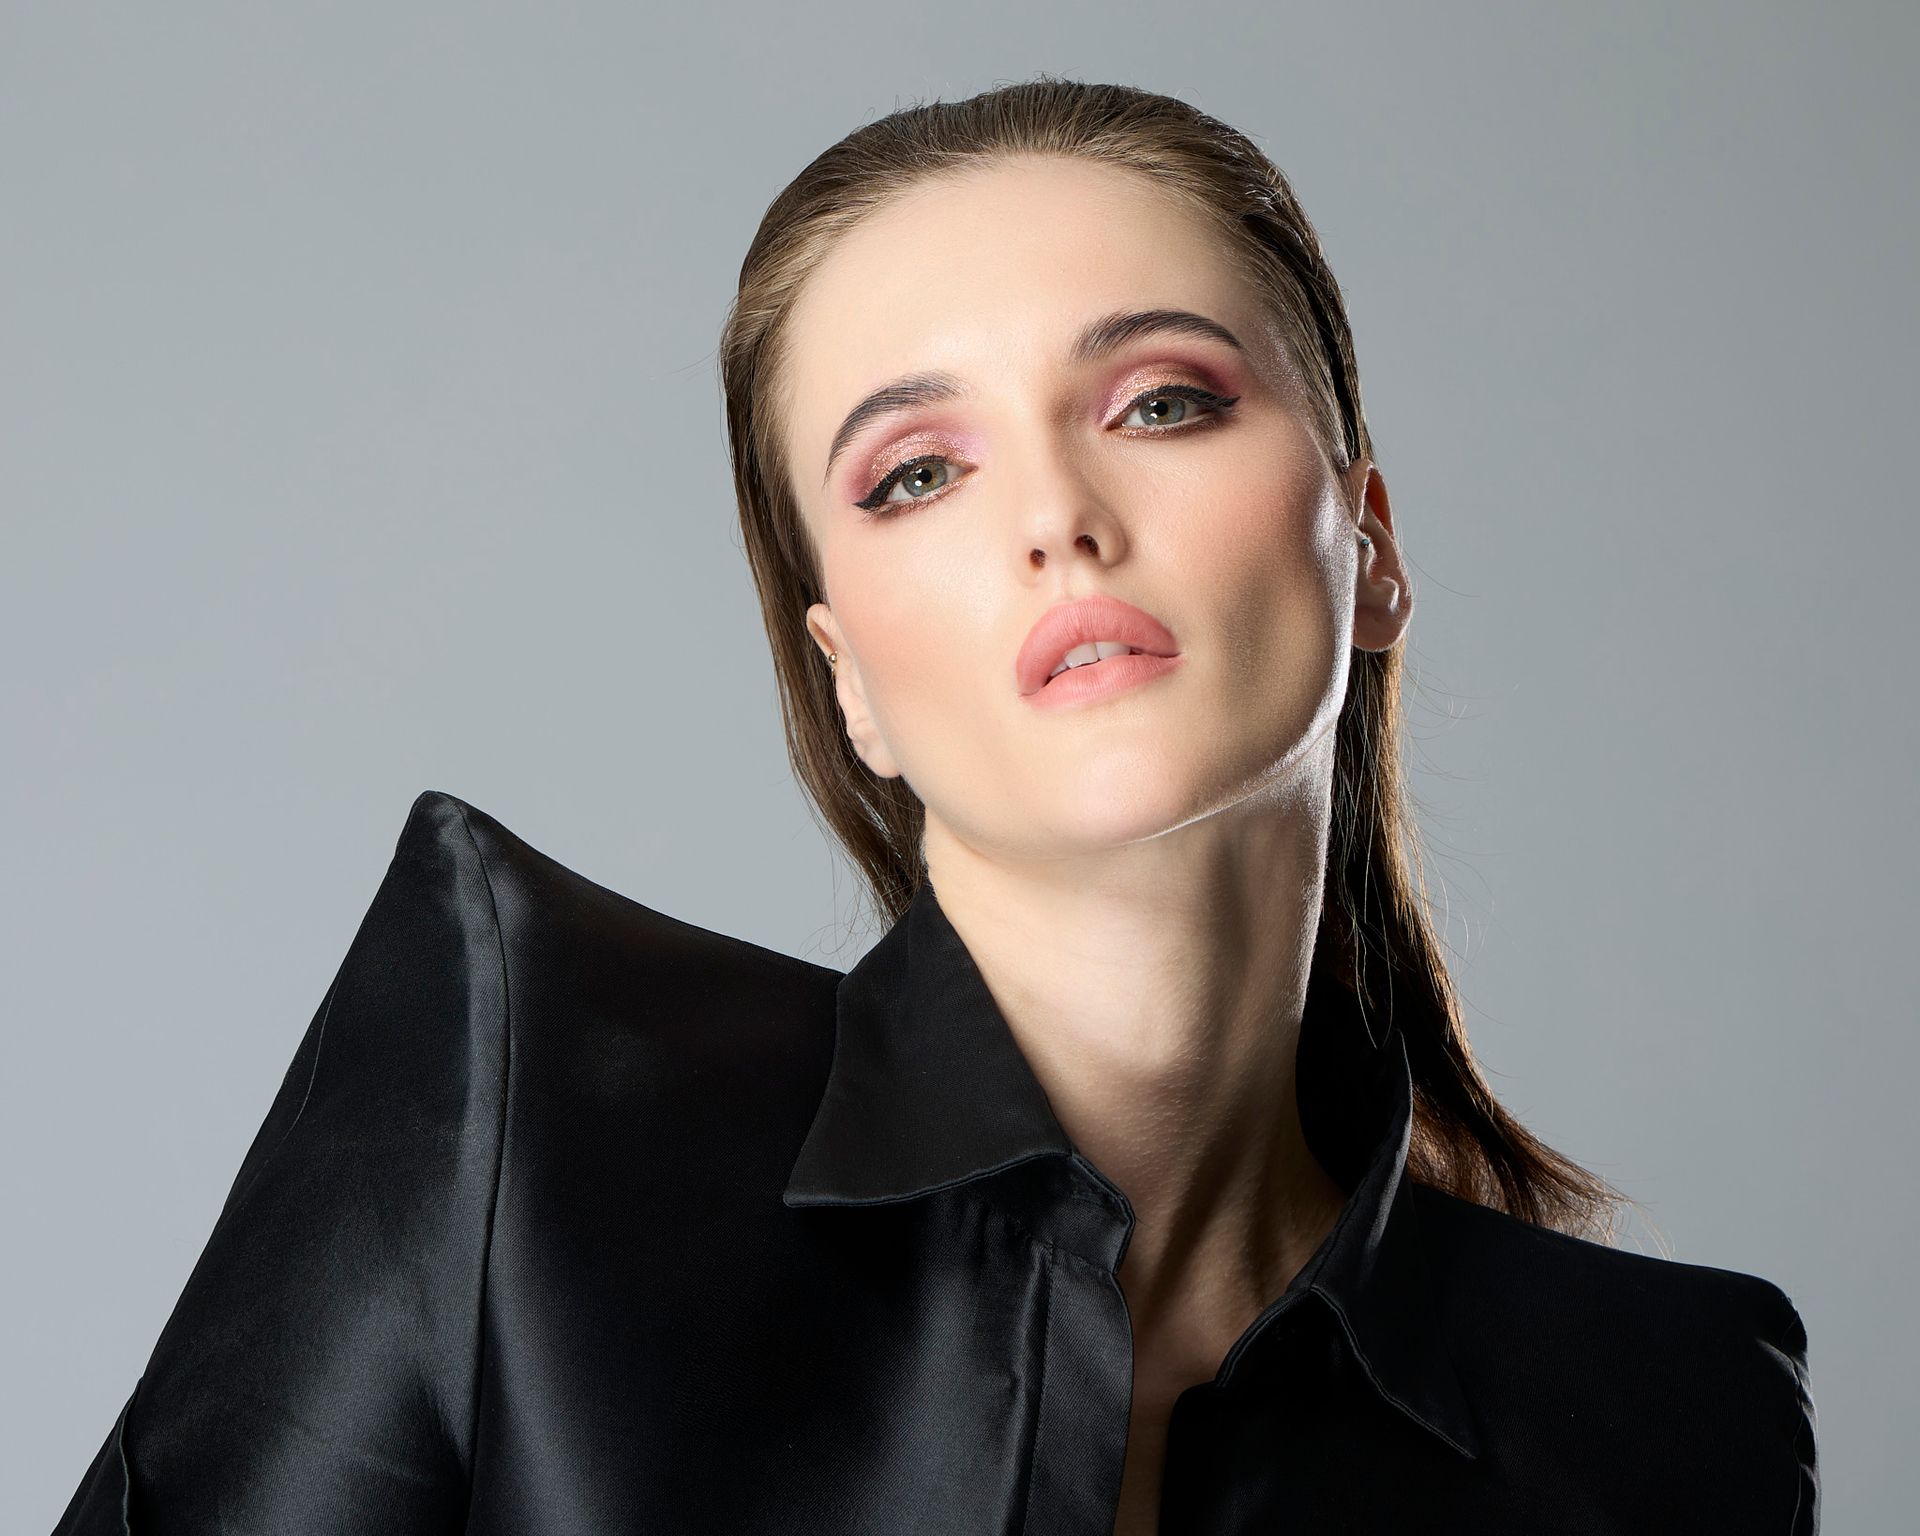 International top model wearing a elegant black gown for NY Fashion week.